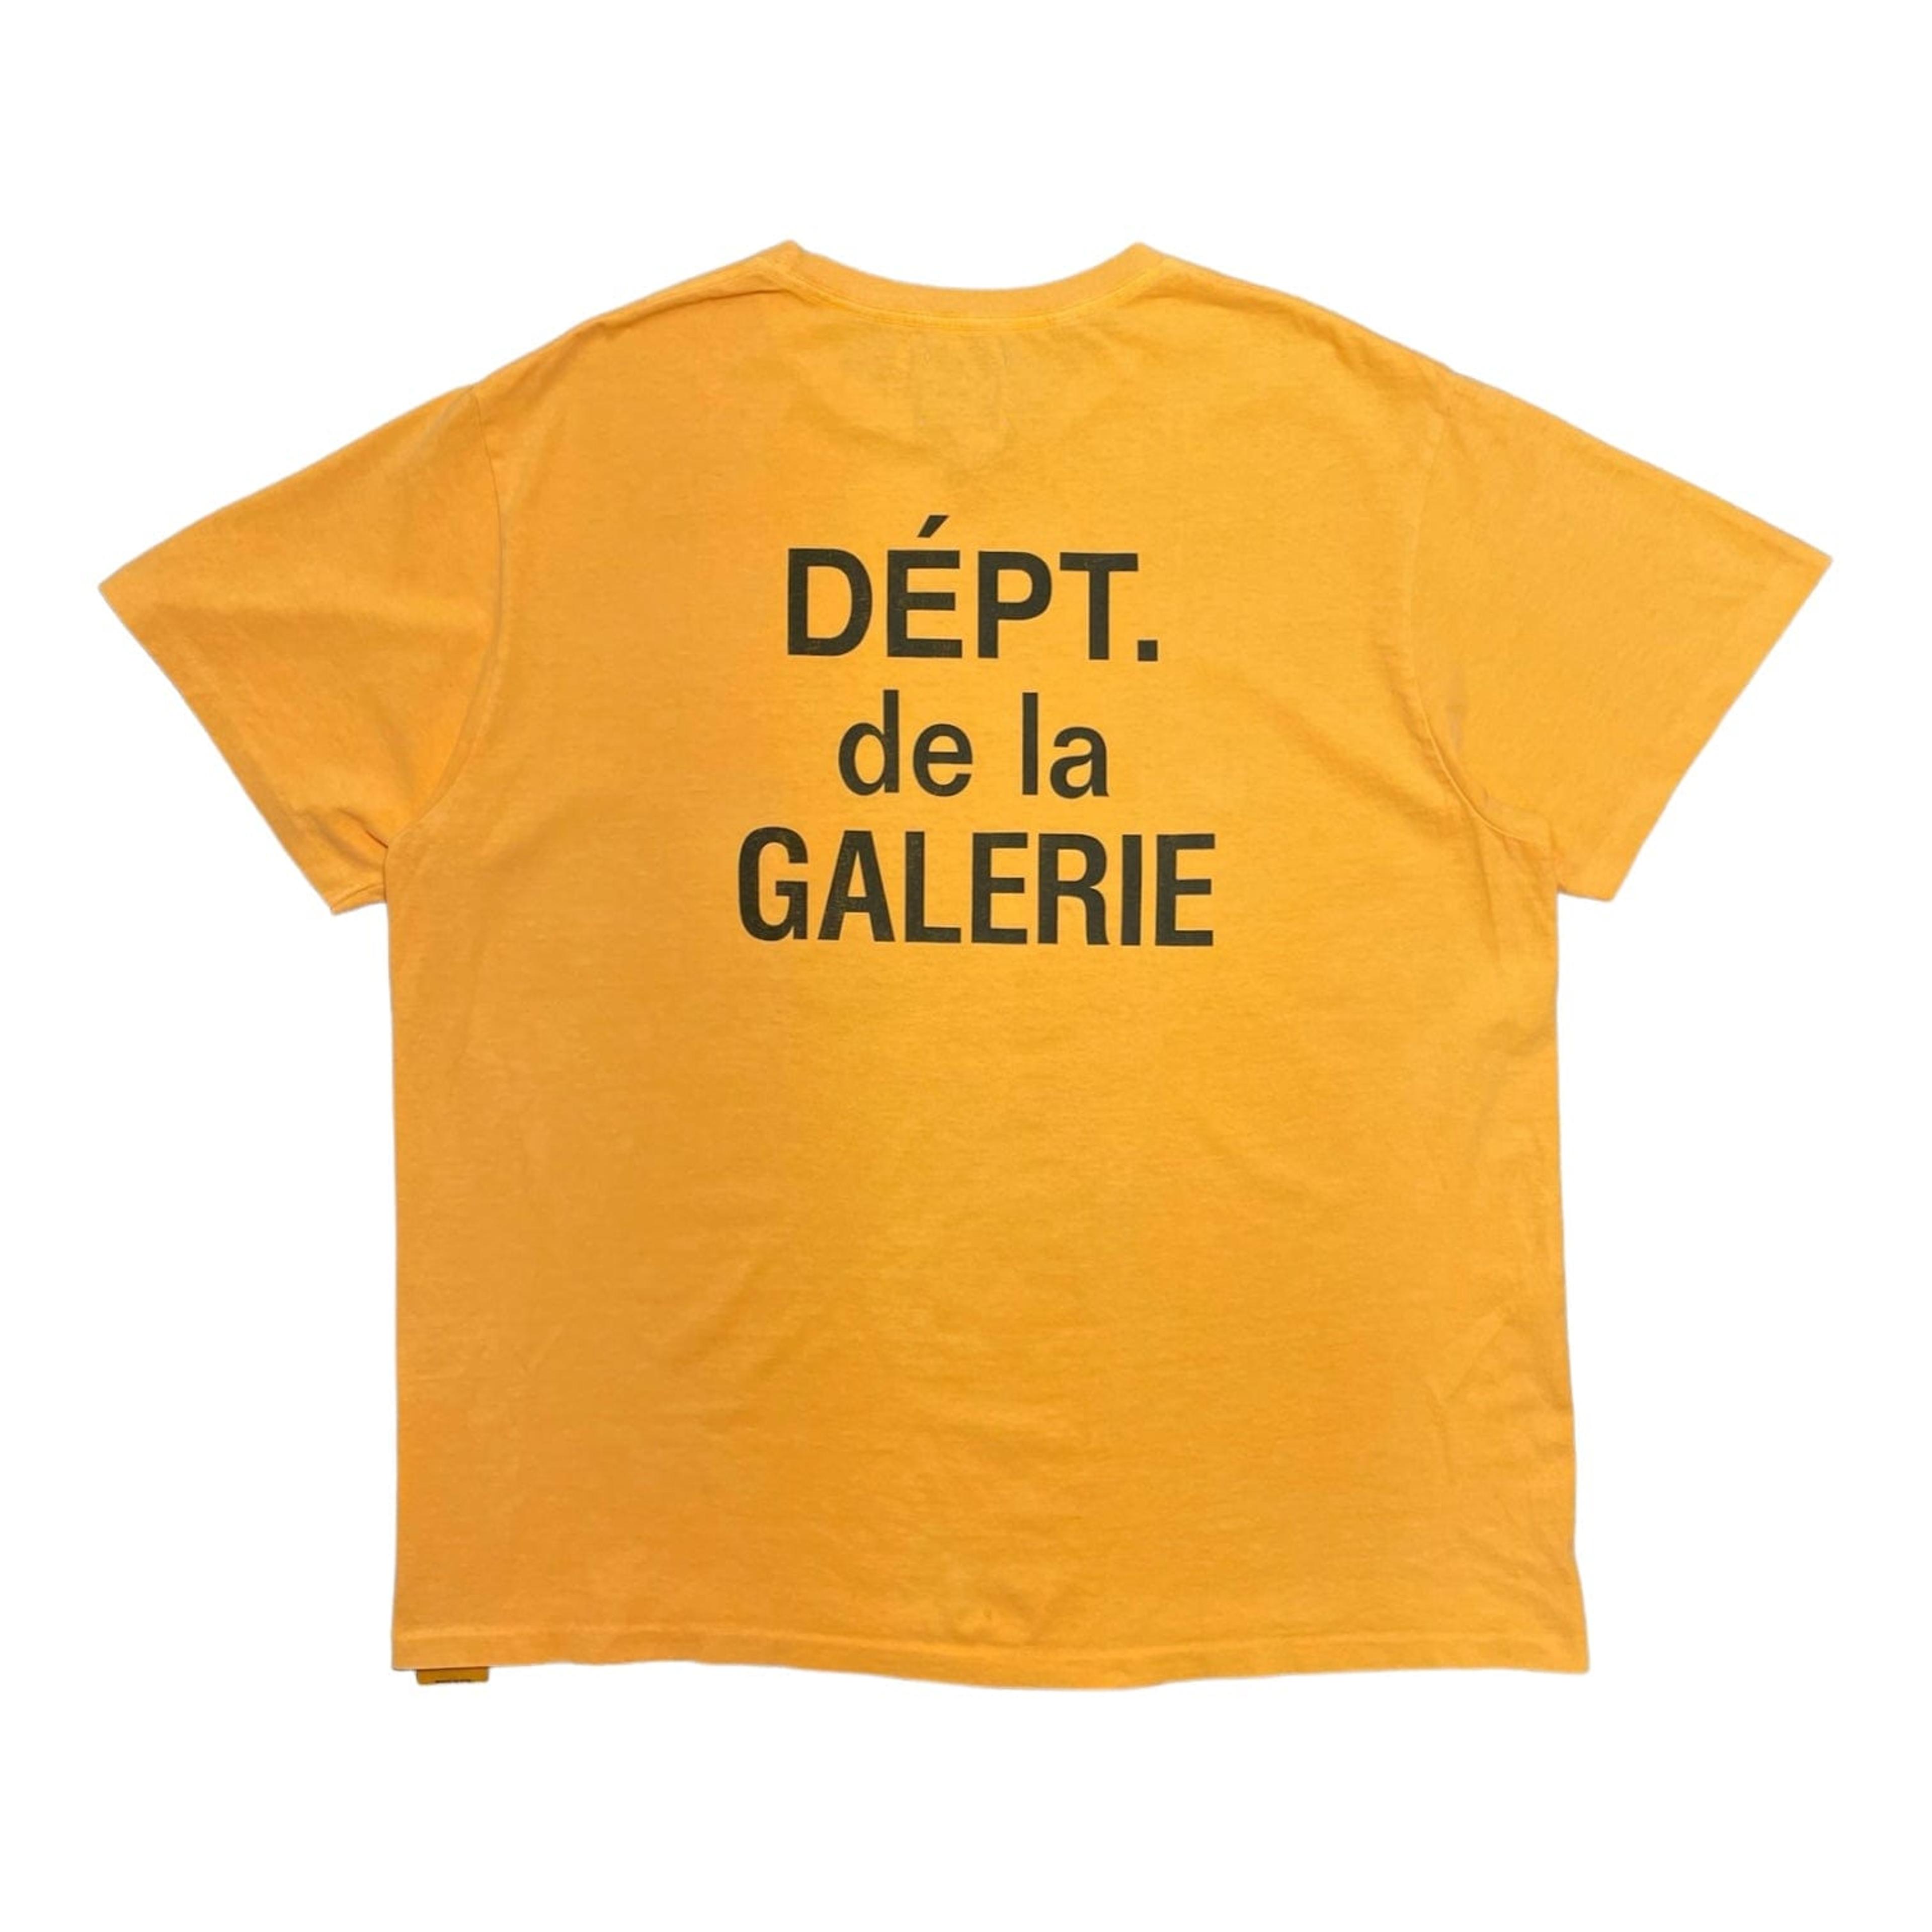 Alternate View 1 of Gallery Department French Logo Short Sleeve Tee Shirt Flo Orange